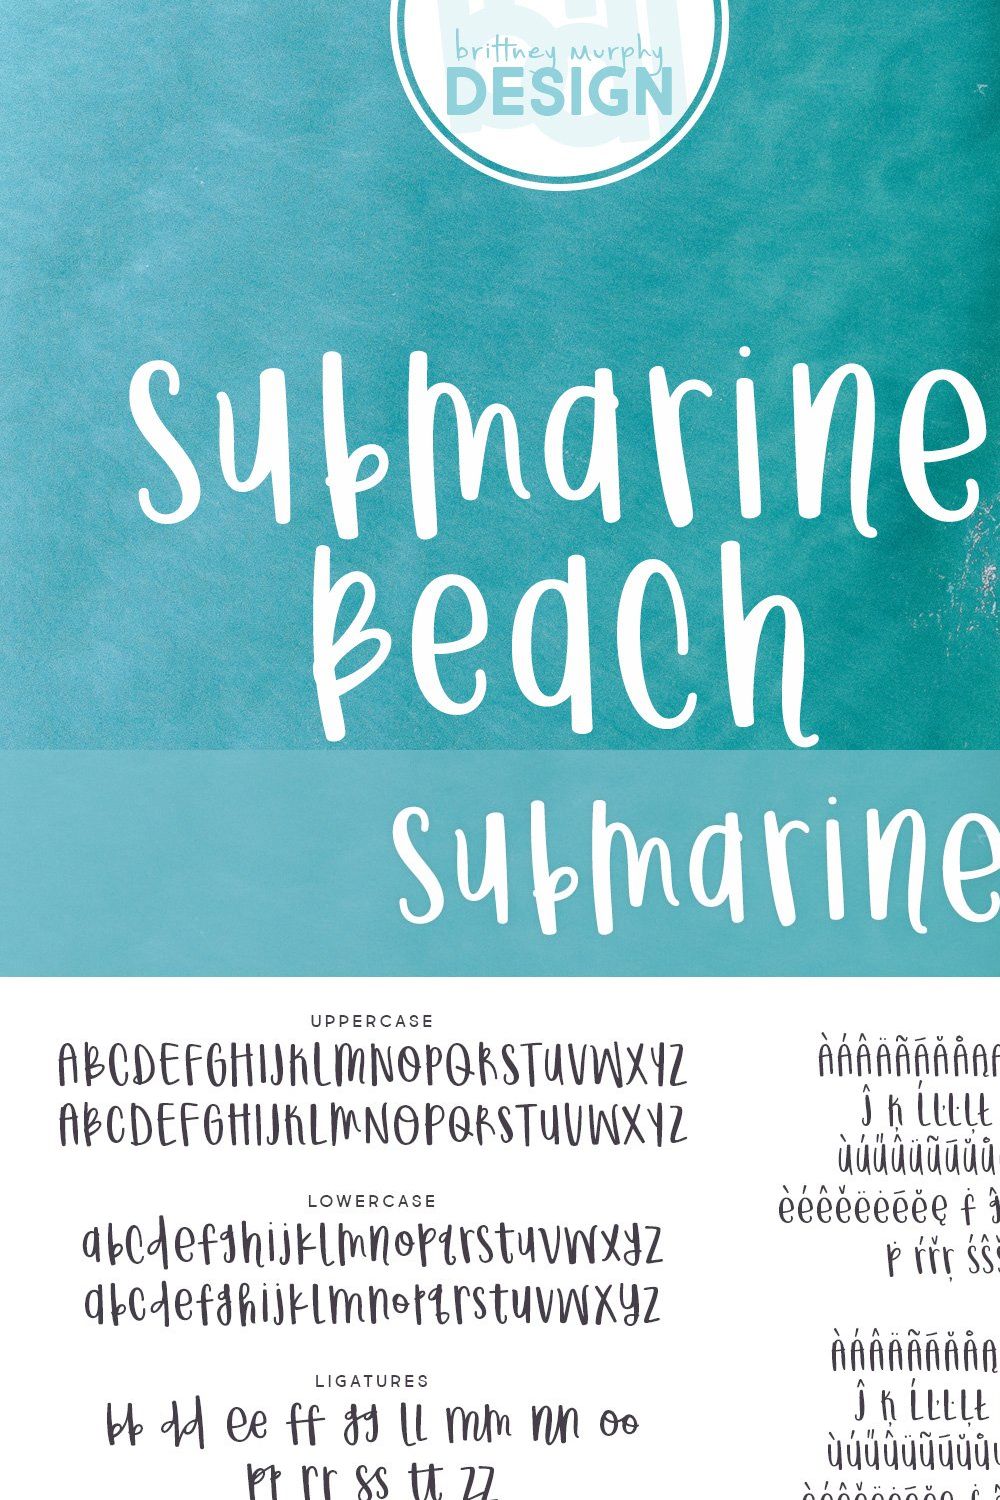 Submarine Beach pinterest preview image.